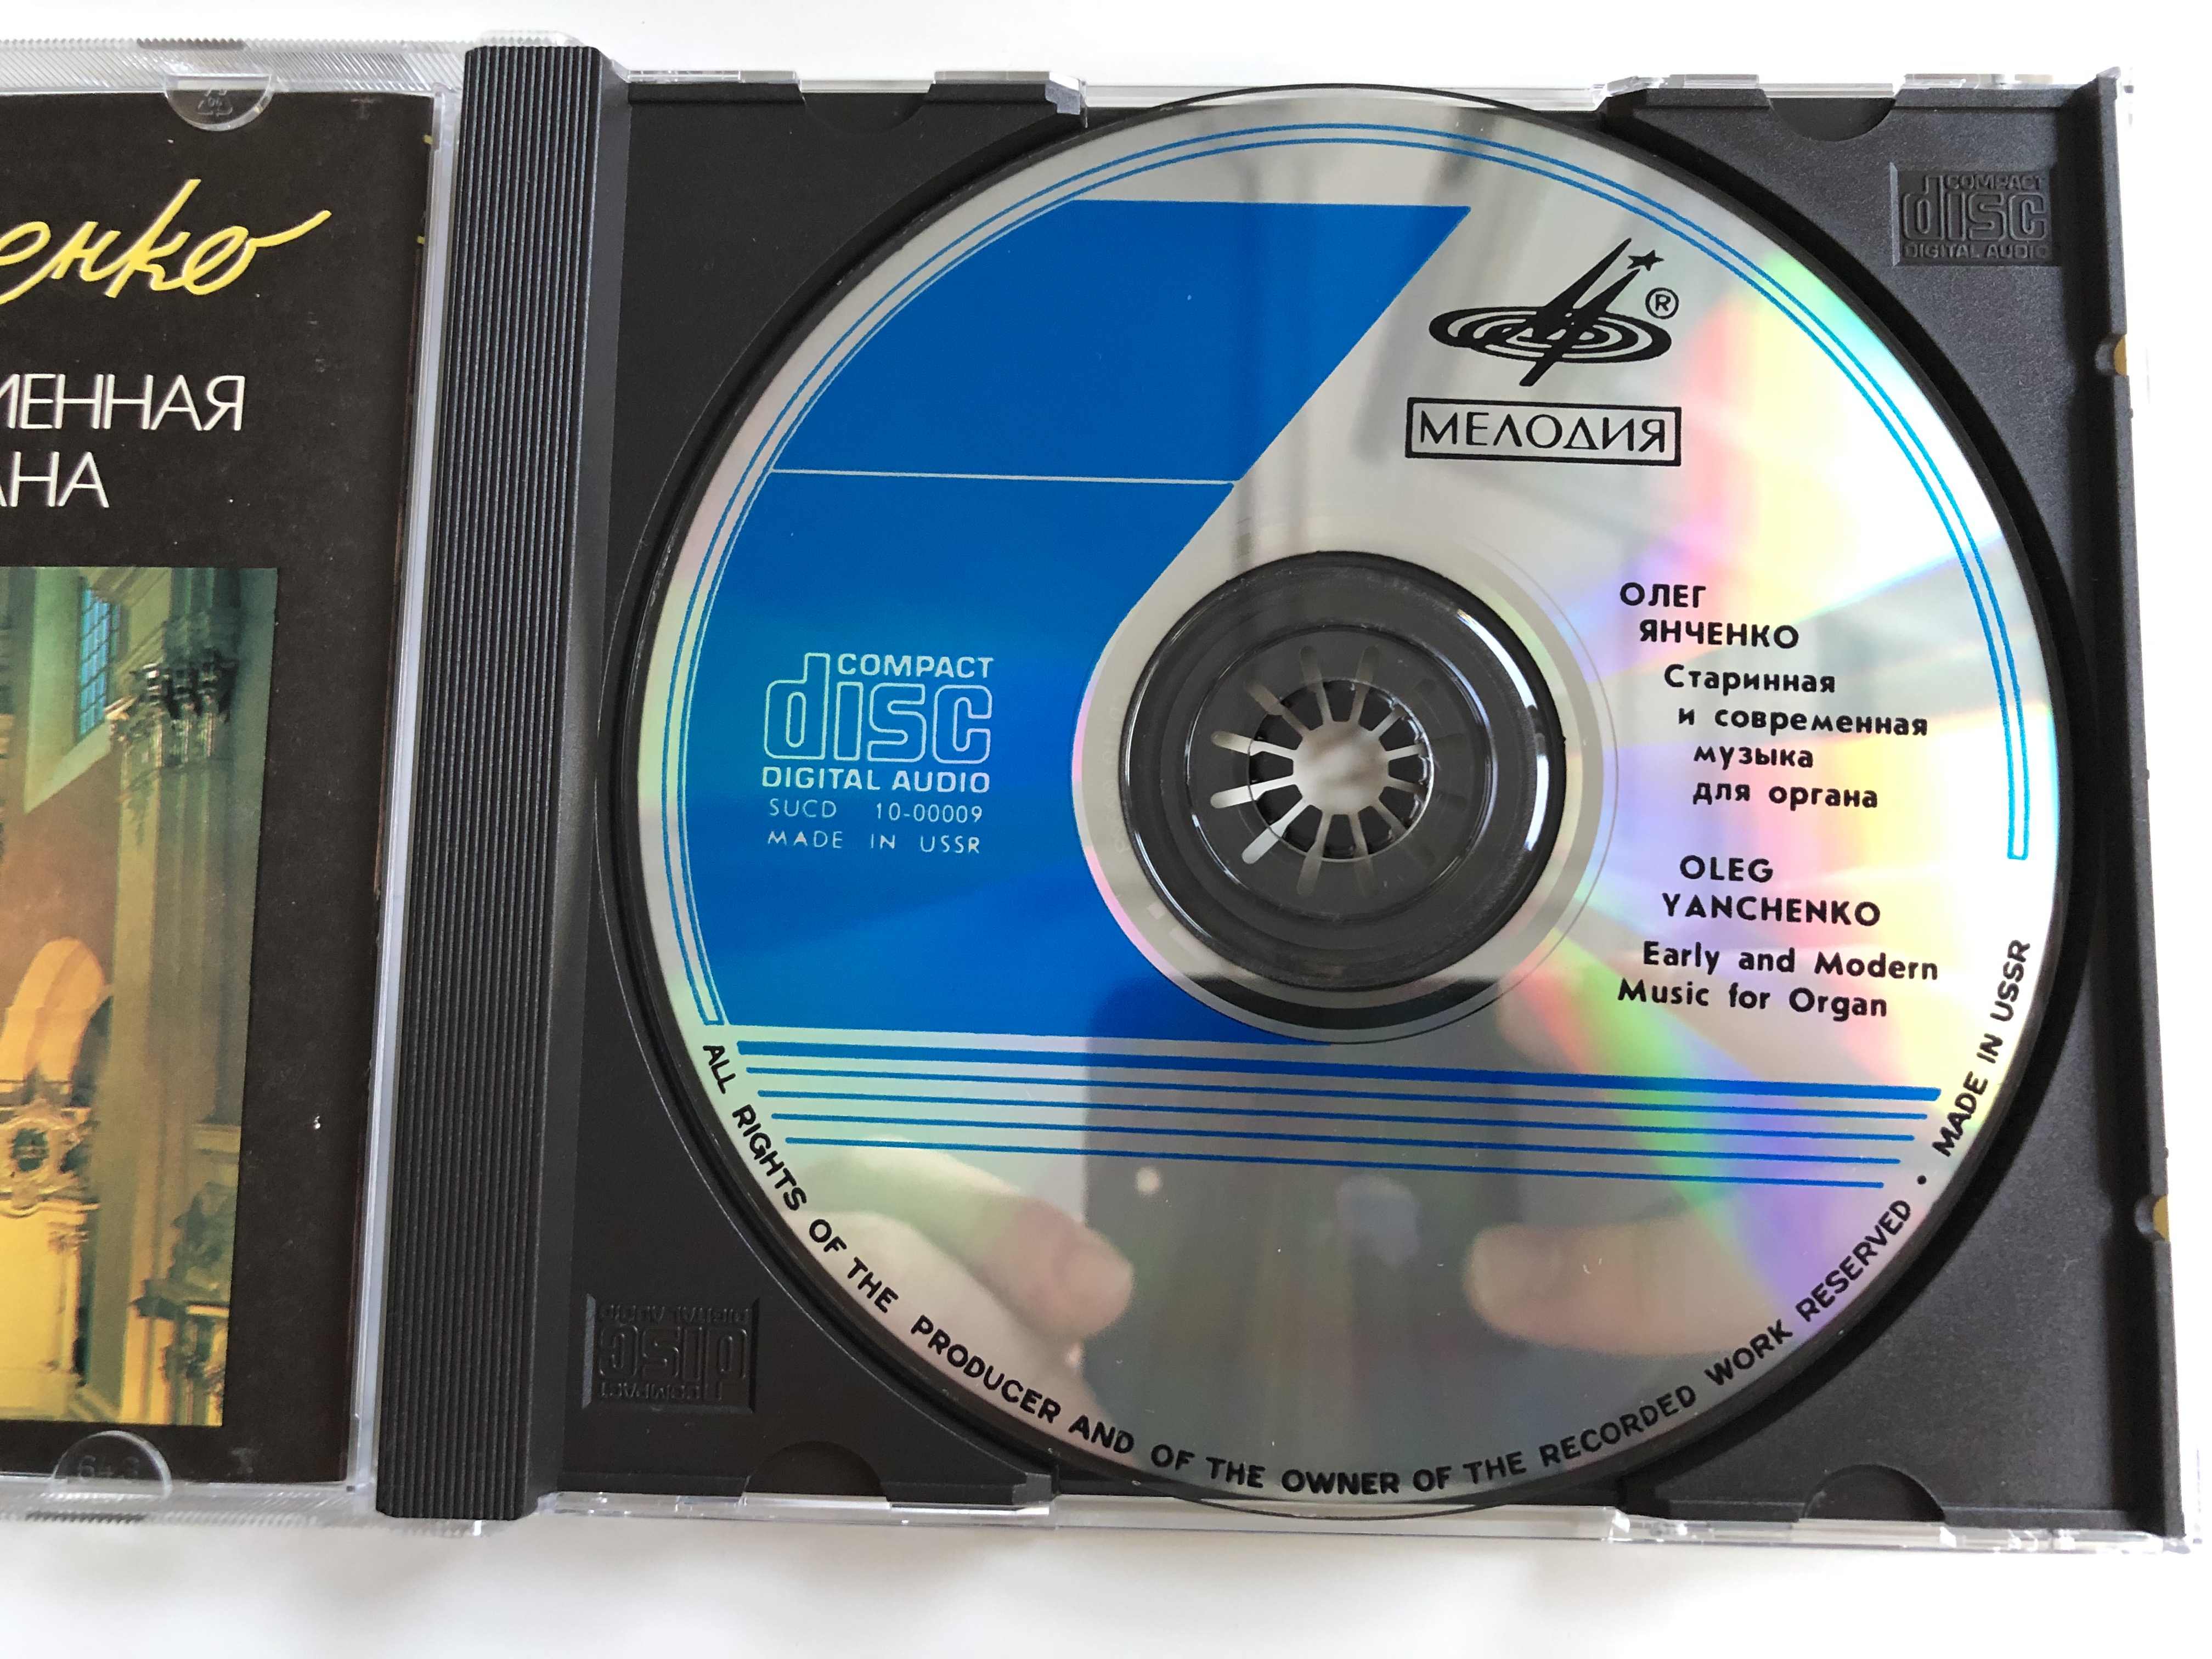 oleg-yanchenko-early-and-modern-music-for-organ-ussr-audio-cd-1988-sucd-10-00009-5-.jpg